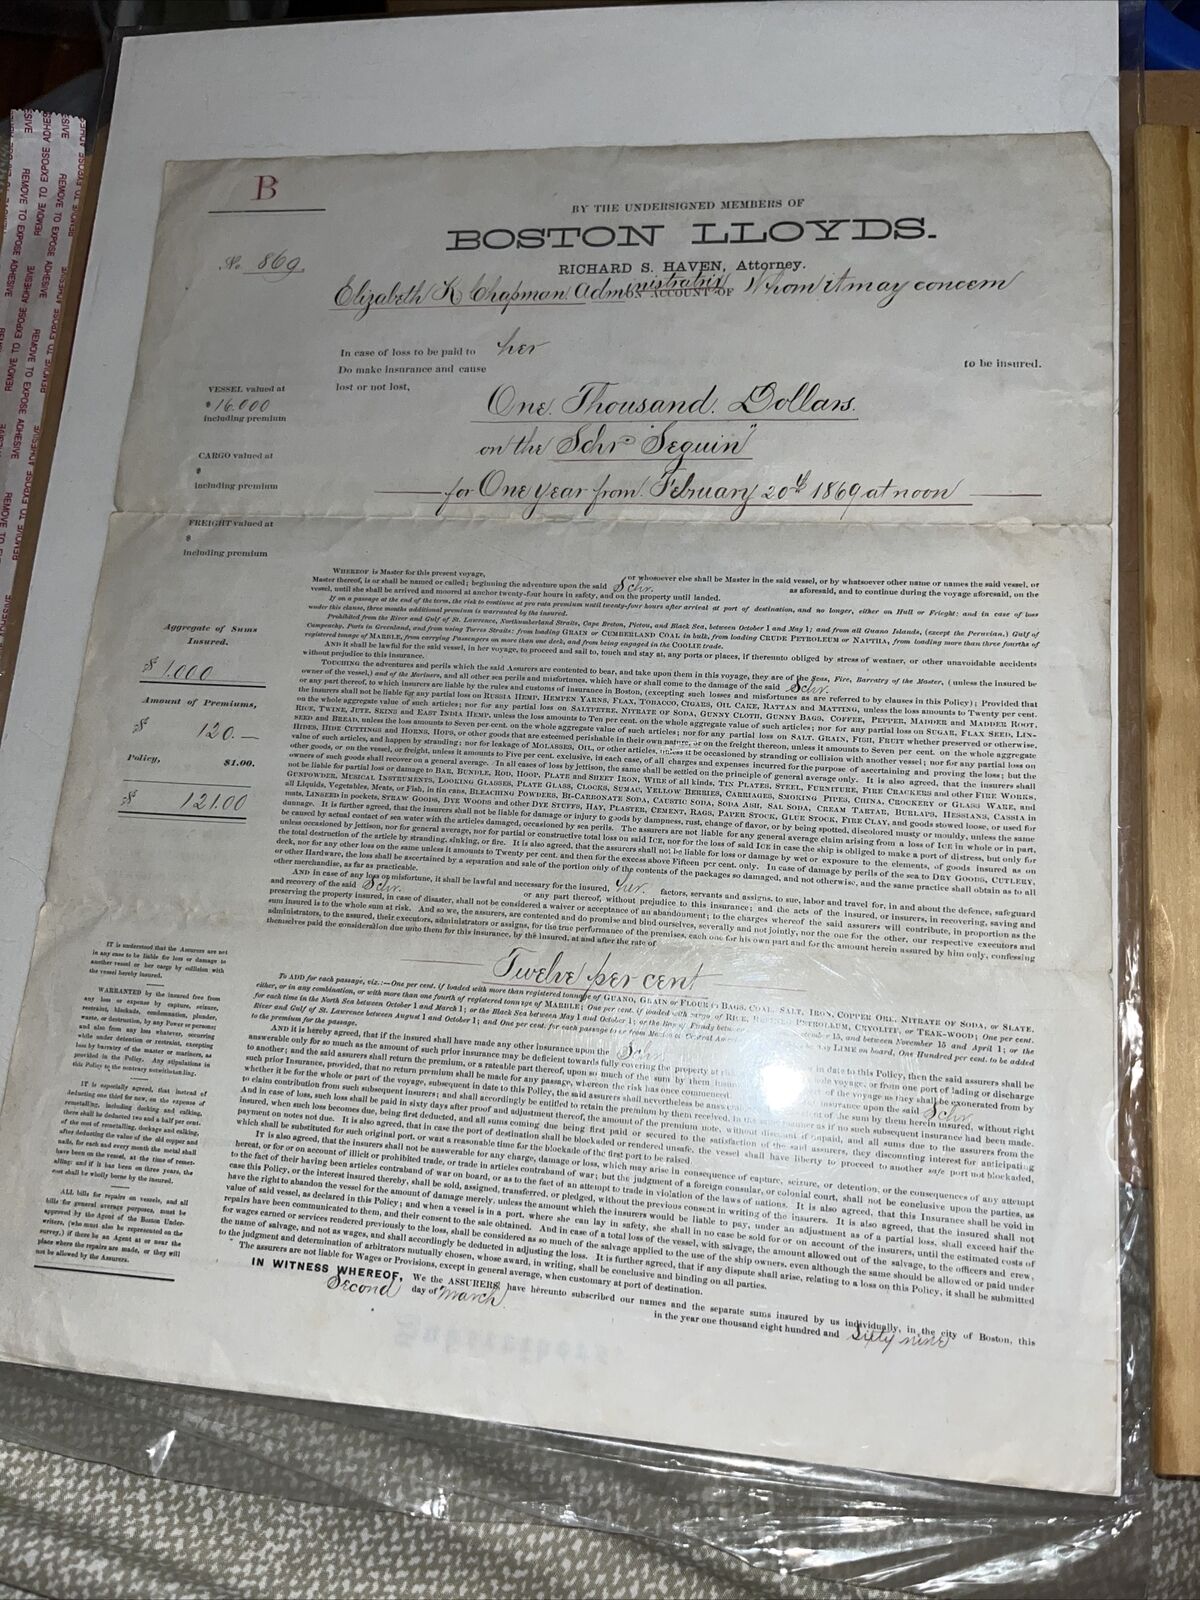 1869 Boston Lloyds Attorney Richard Haven Schooner Vessel Insurance Contract